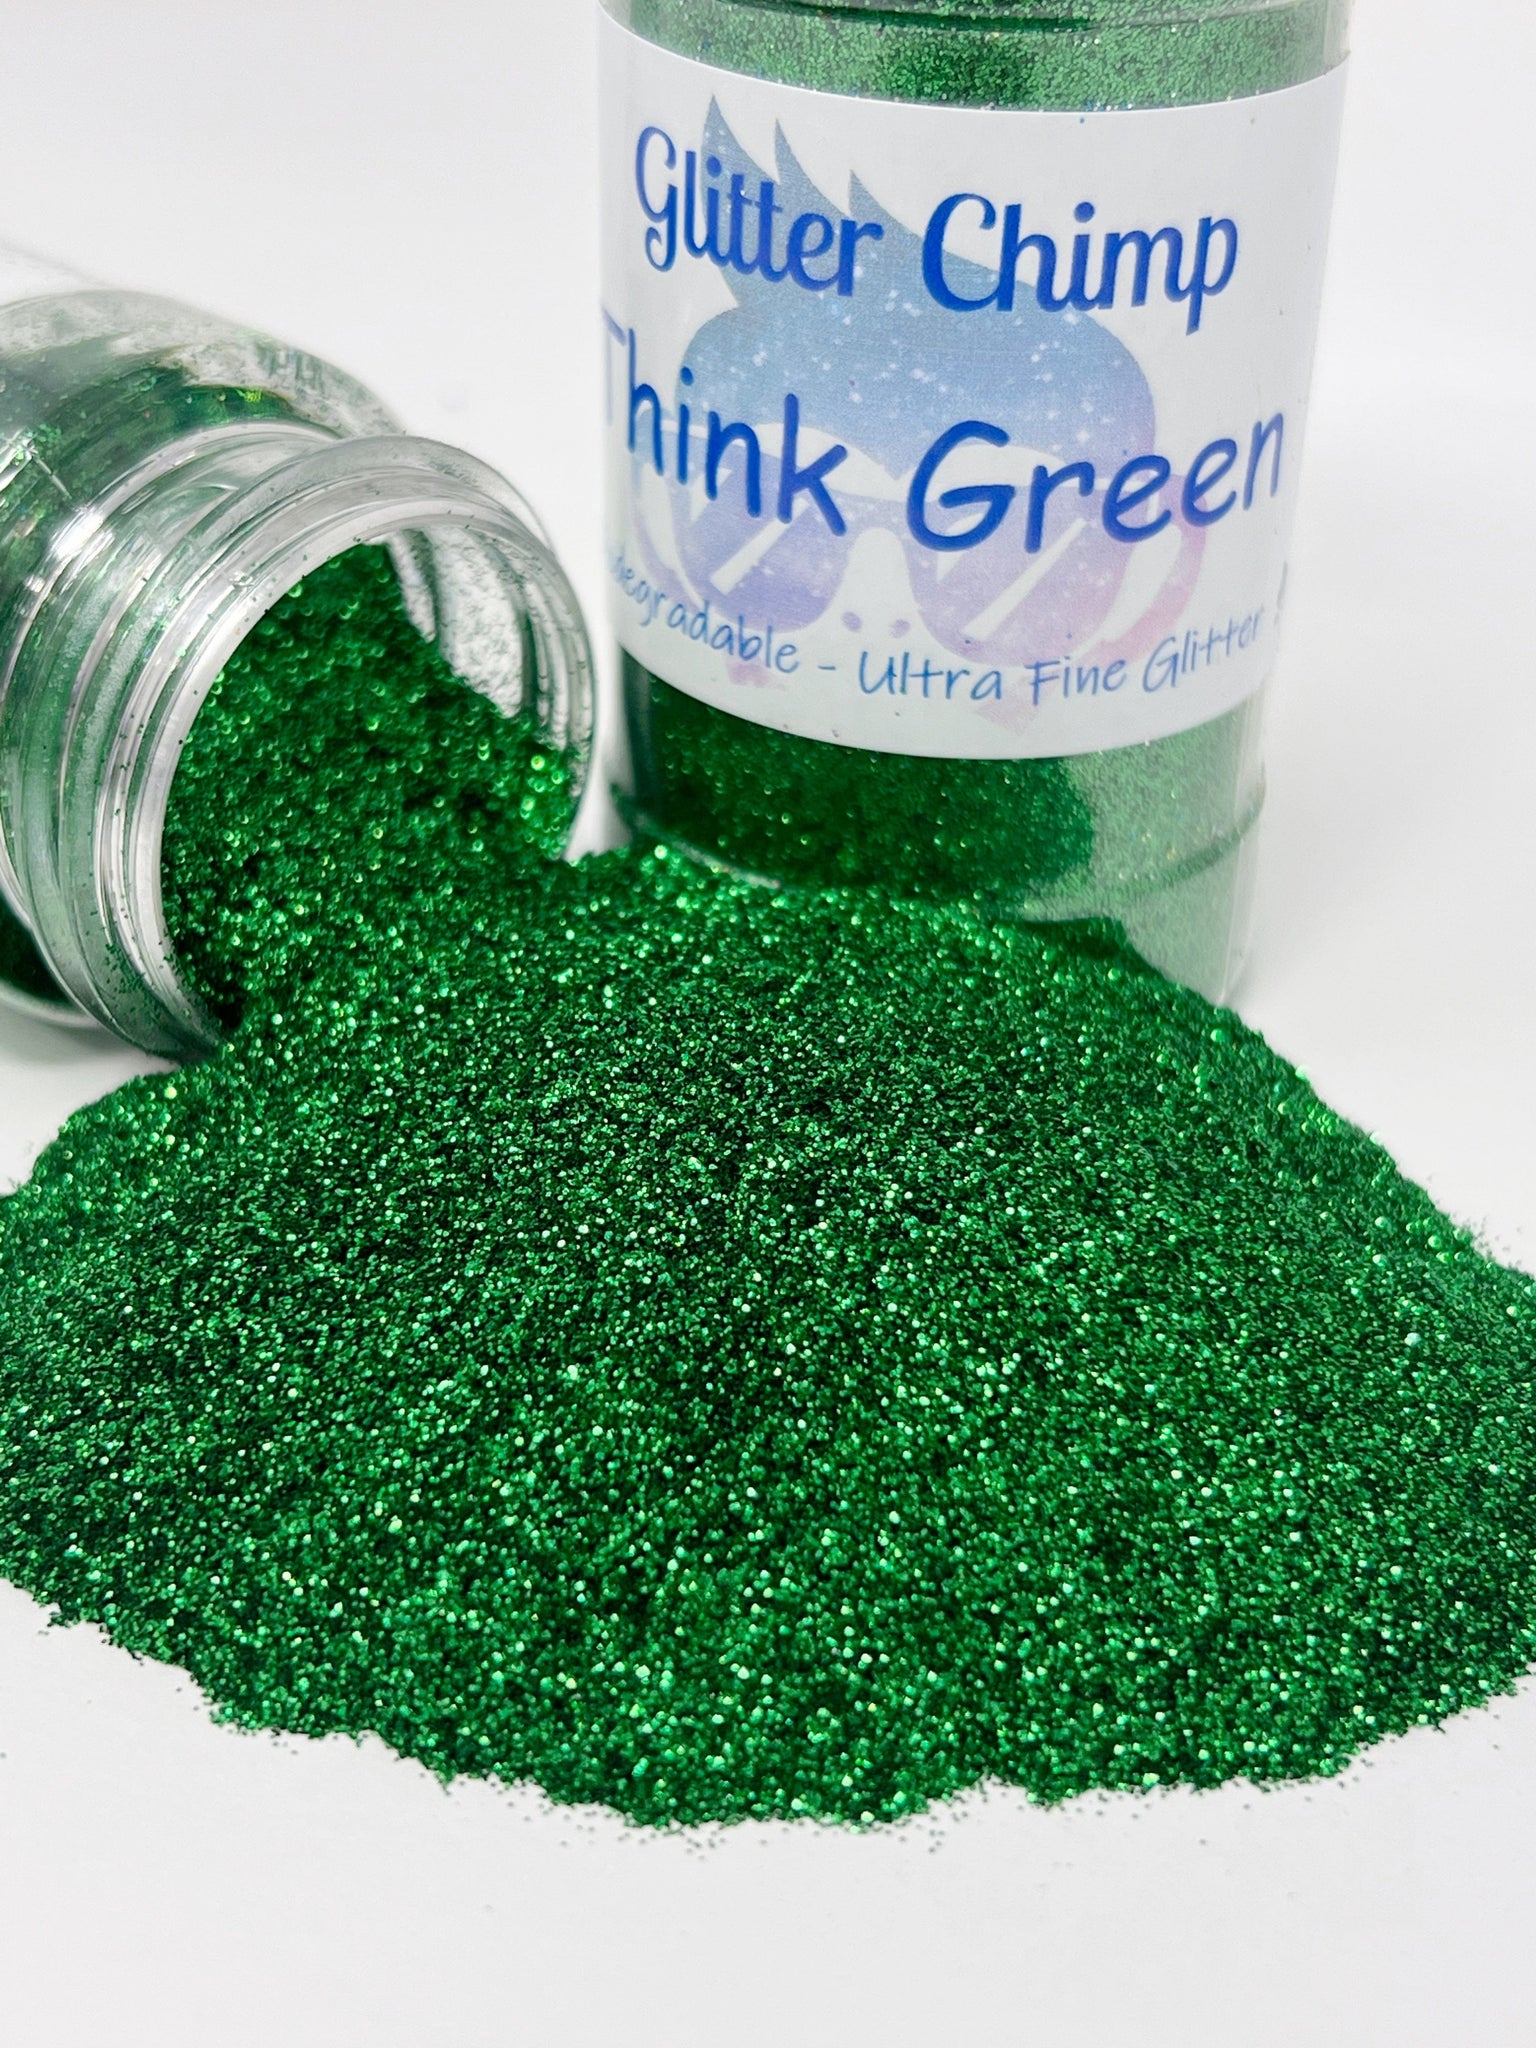 Think Green - Biodegradable Ultra Fine Glitter – Glitter Chimp